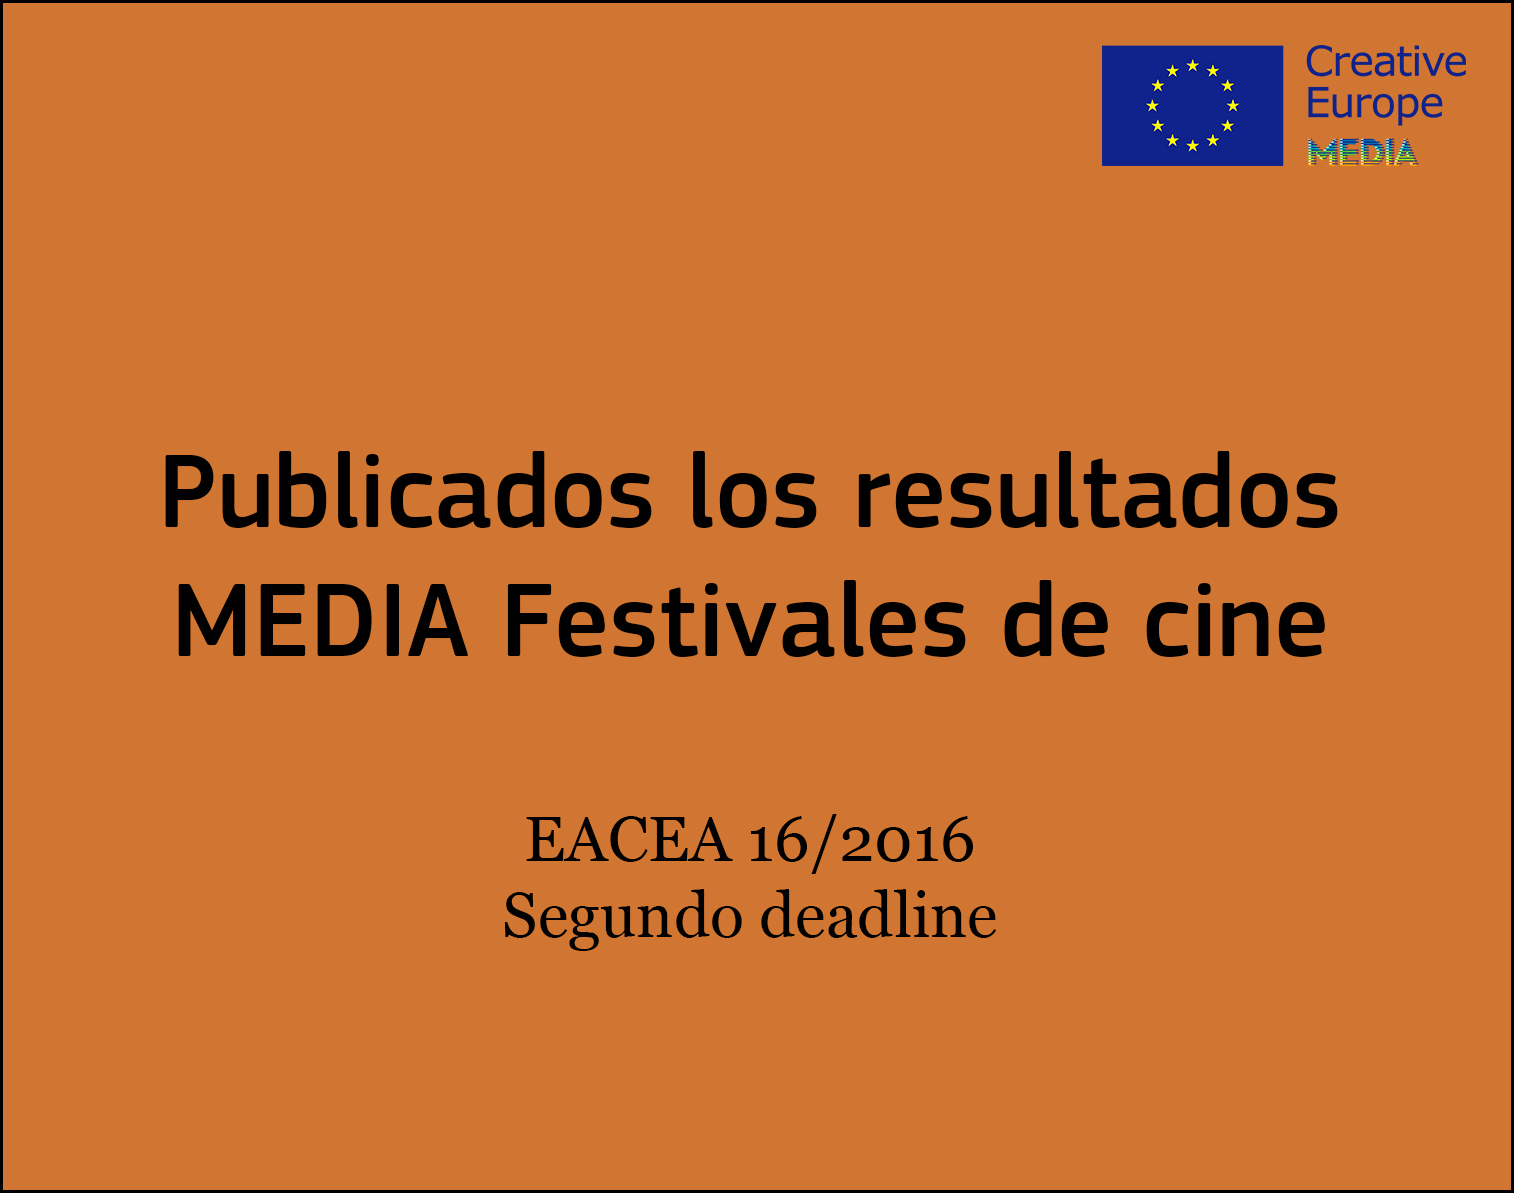 Festivales de cine Resultados Segundo deadline 162016